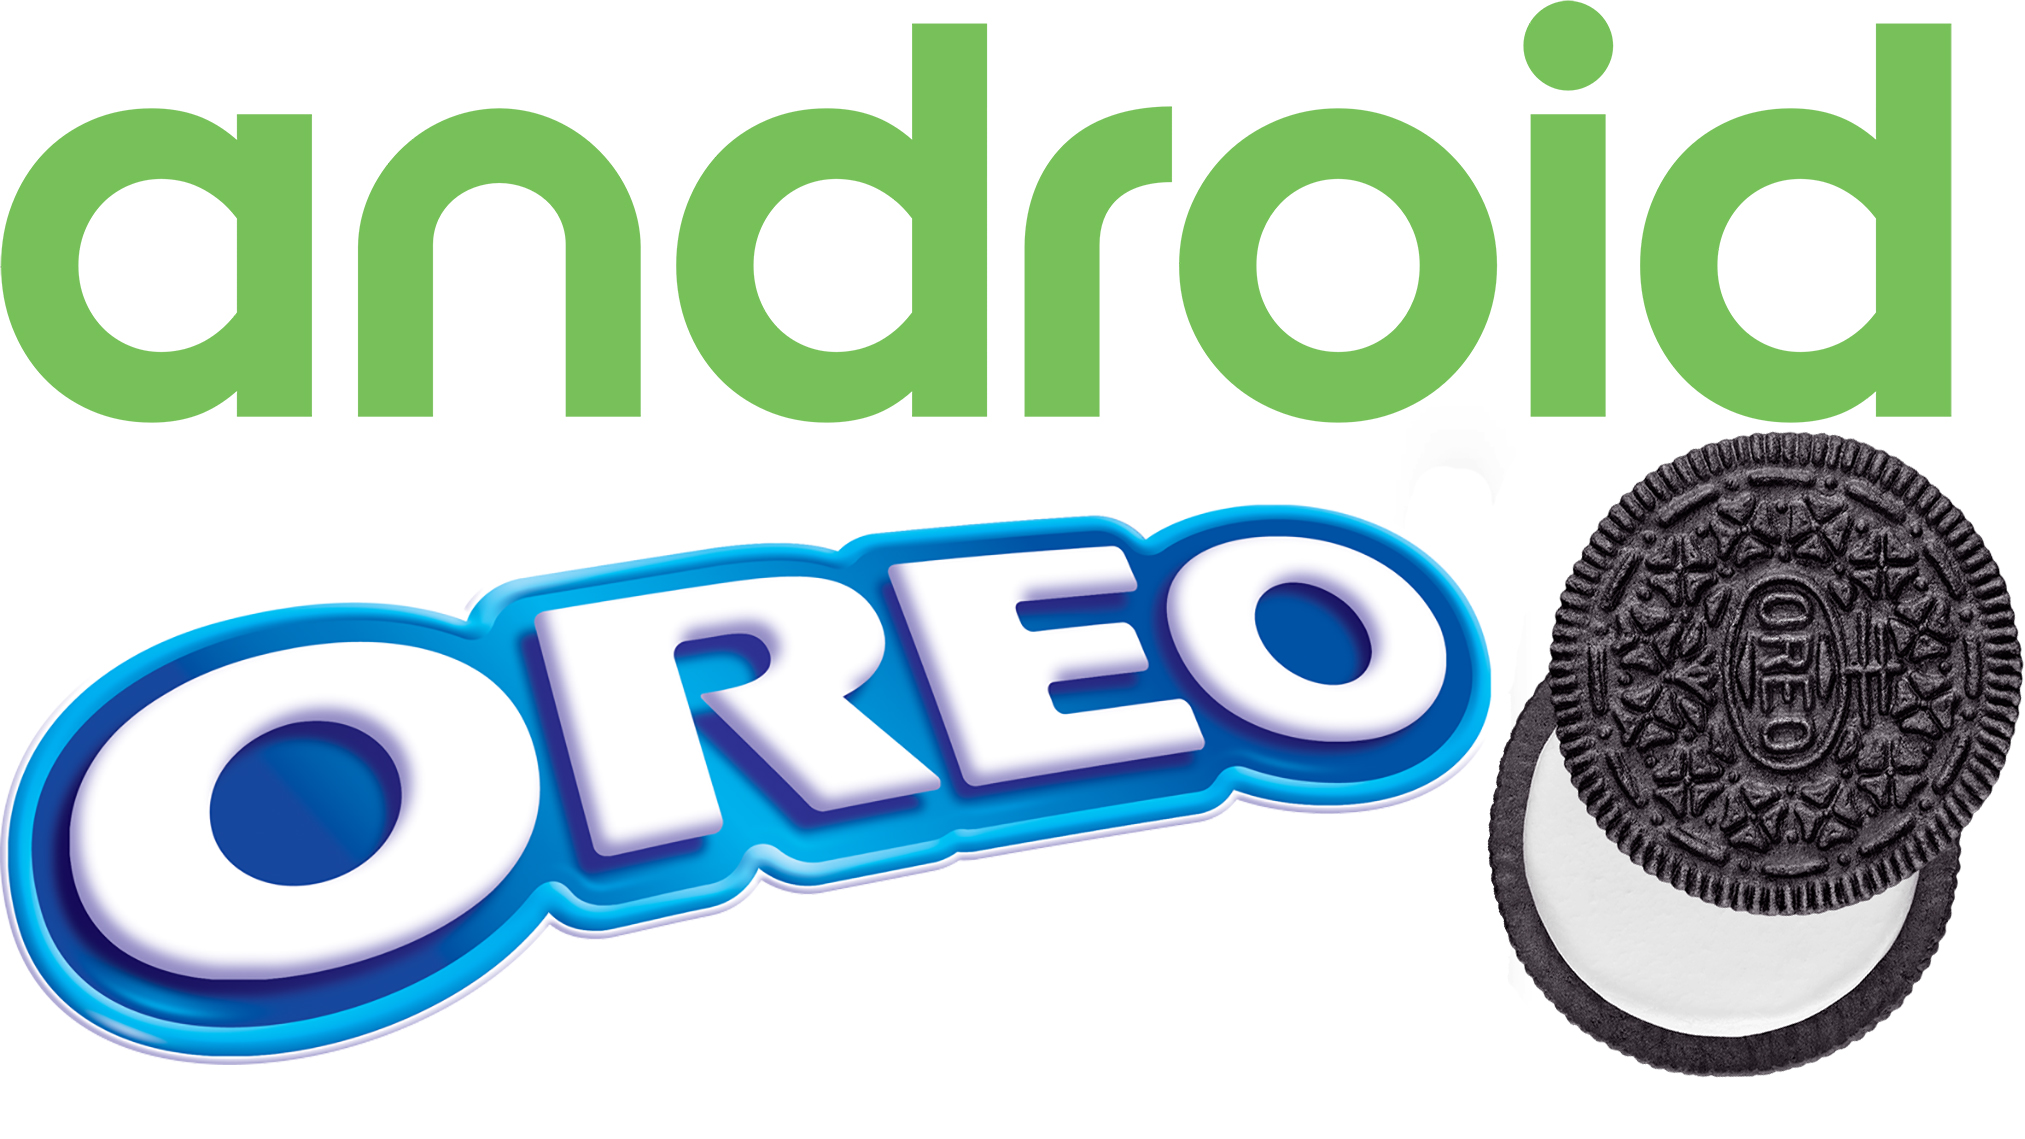 Oreo логотип